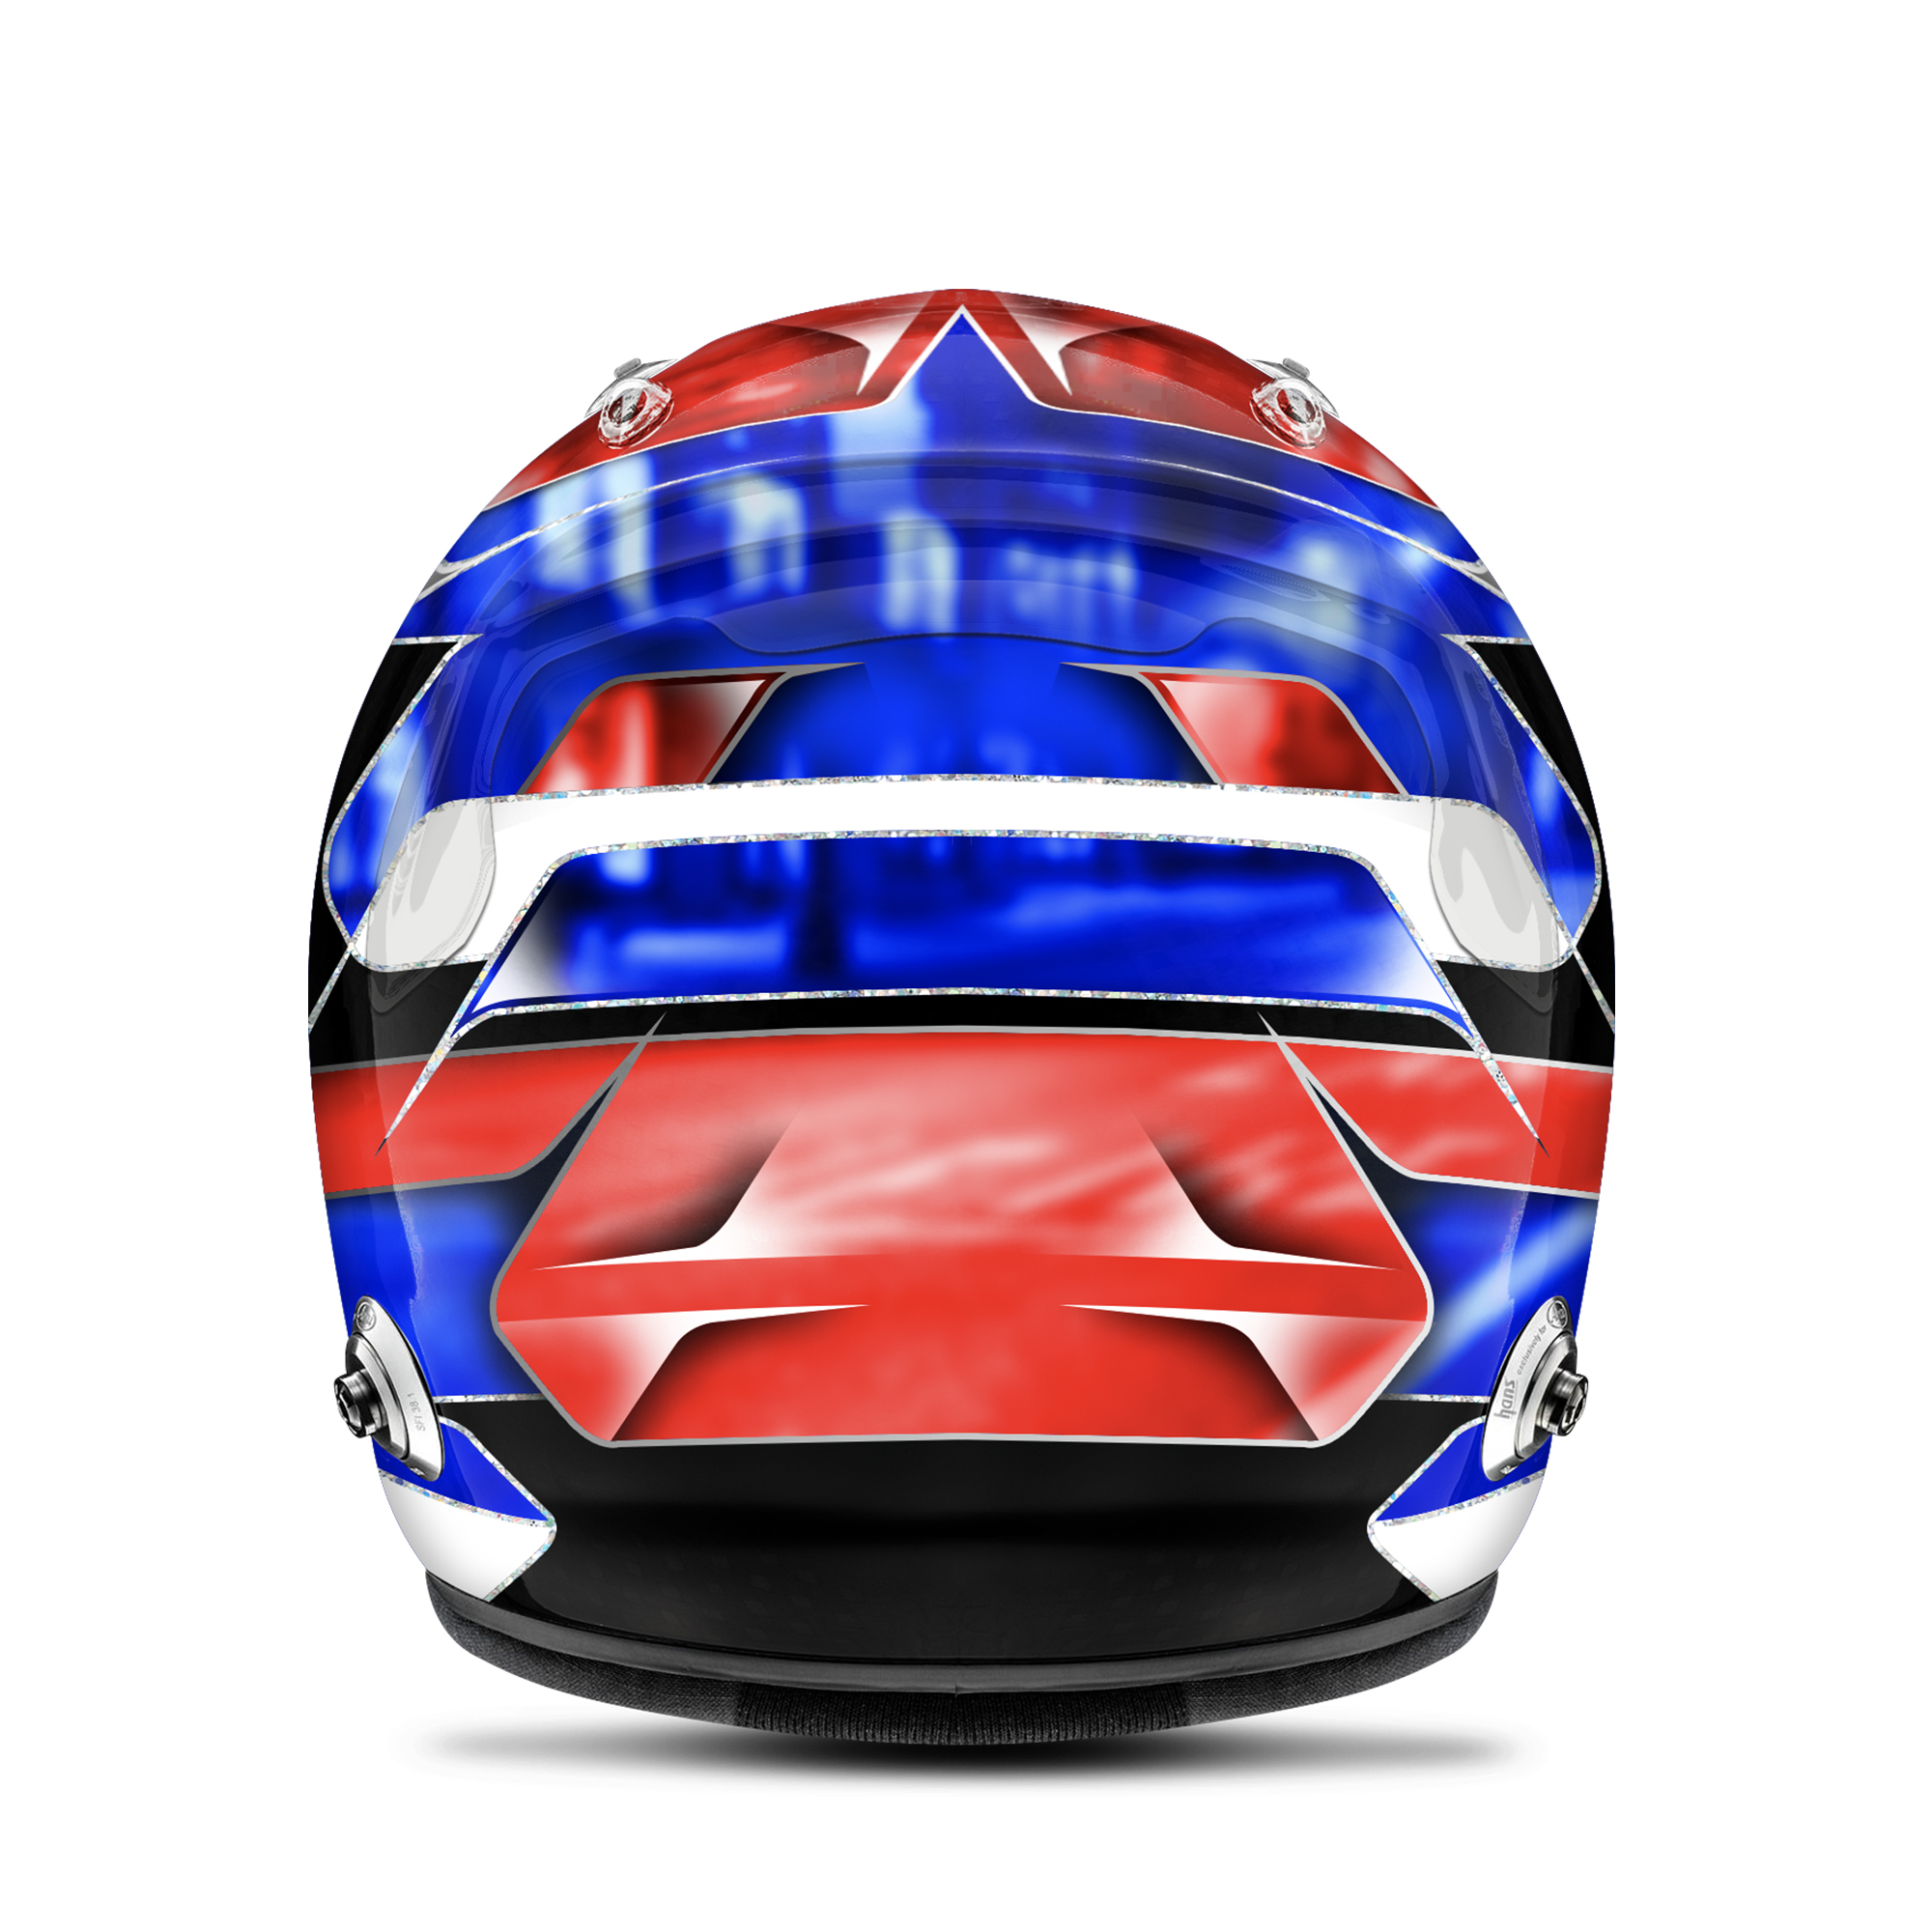 Arai GP-7 FRP helmet design